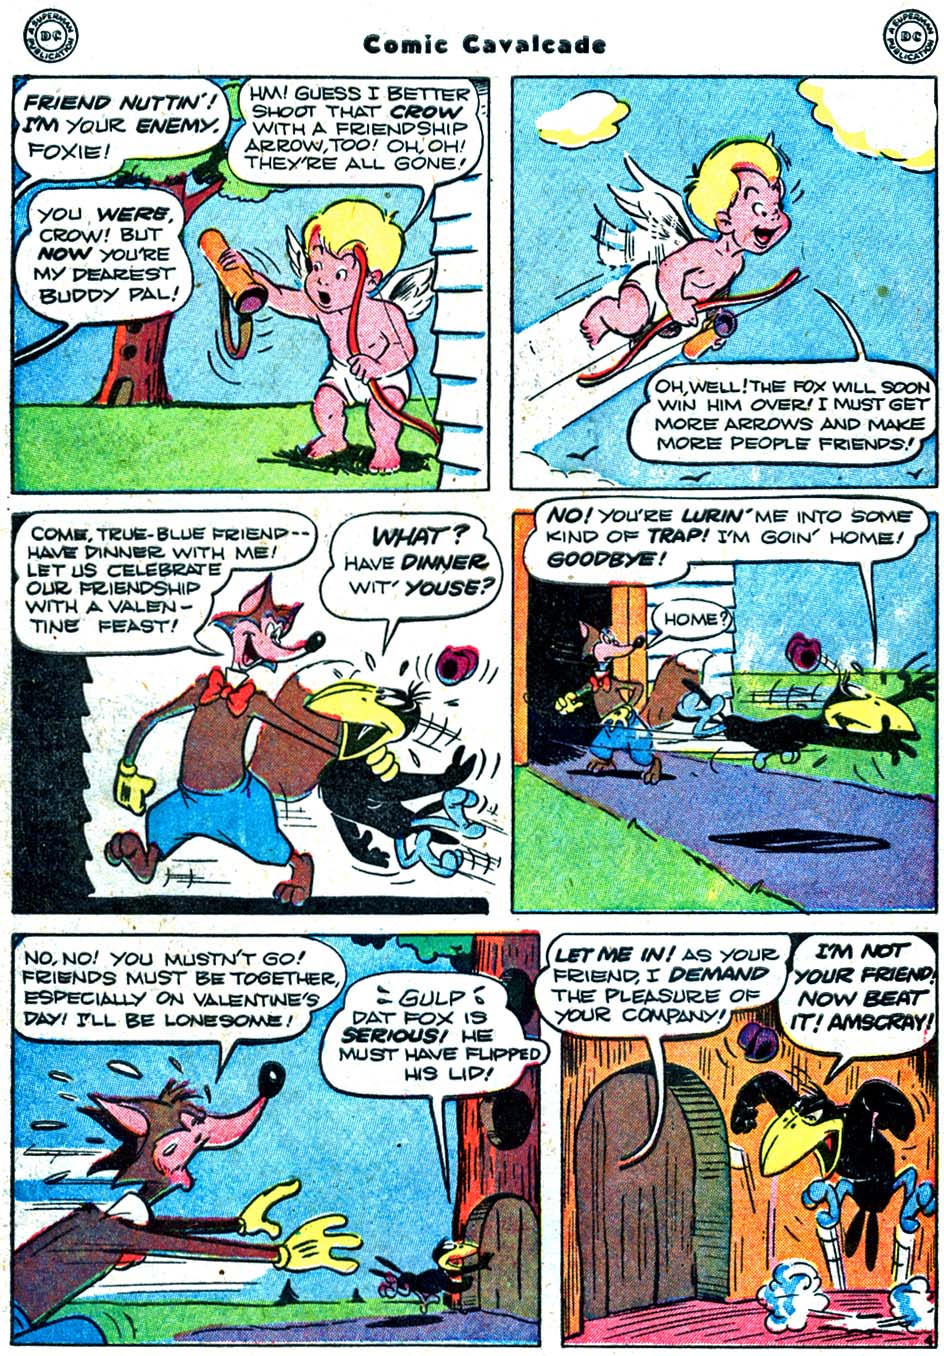 Comic Cavalcade issue 32 - Page 6